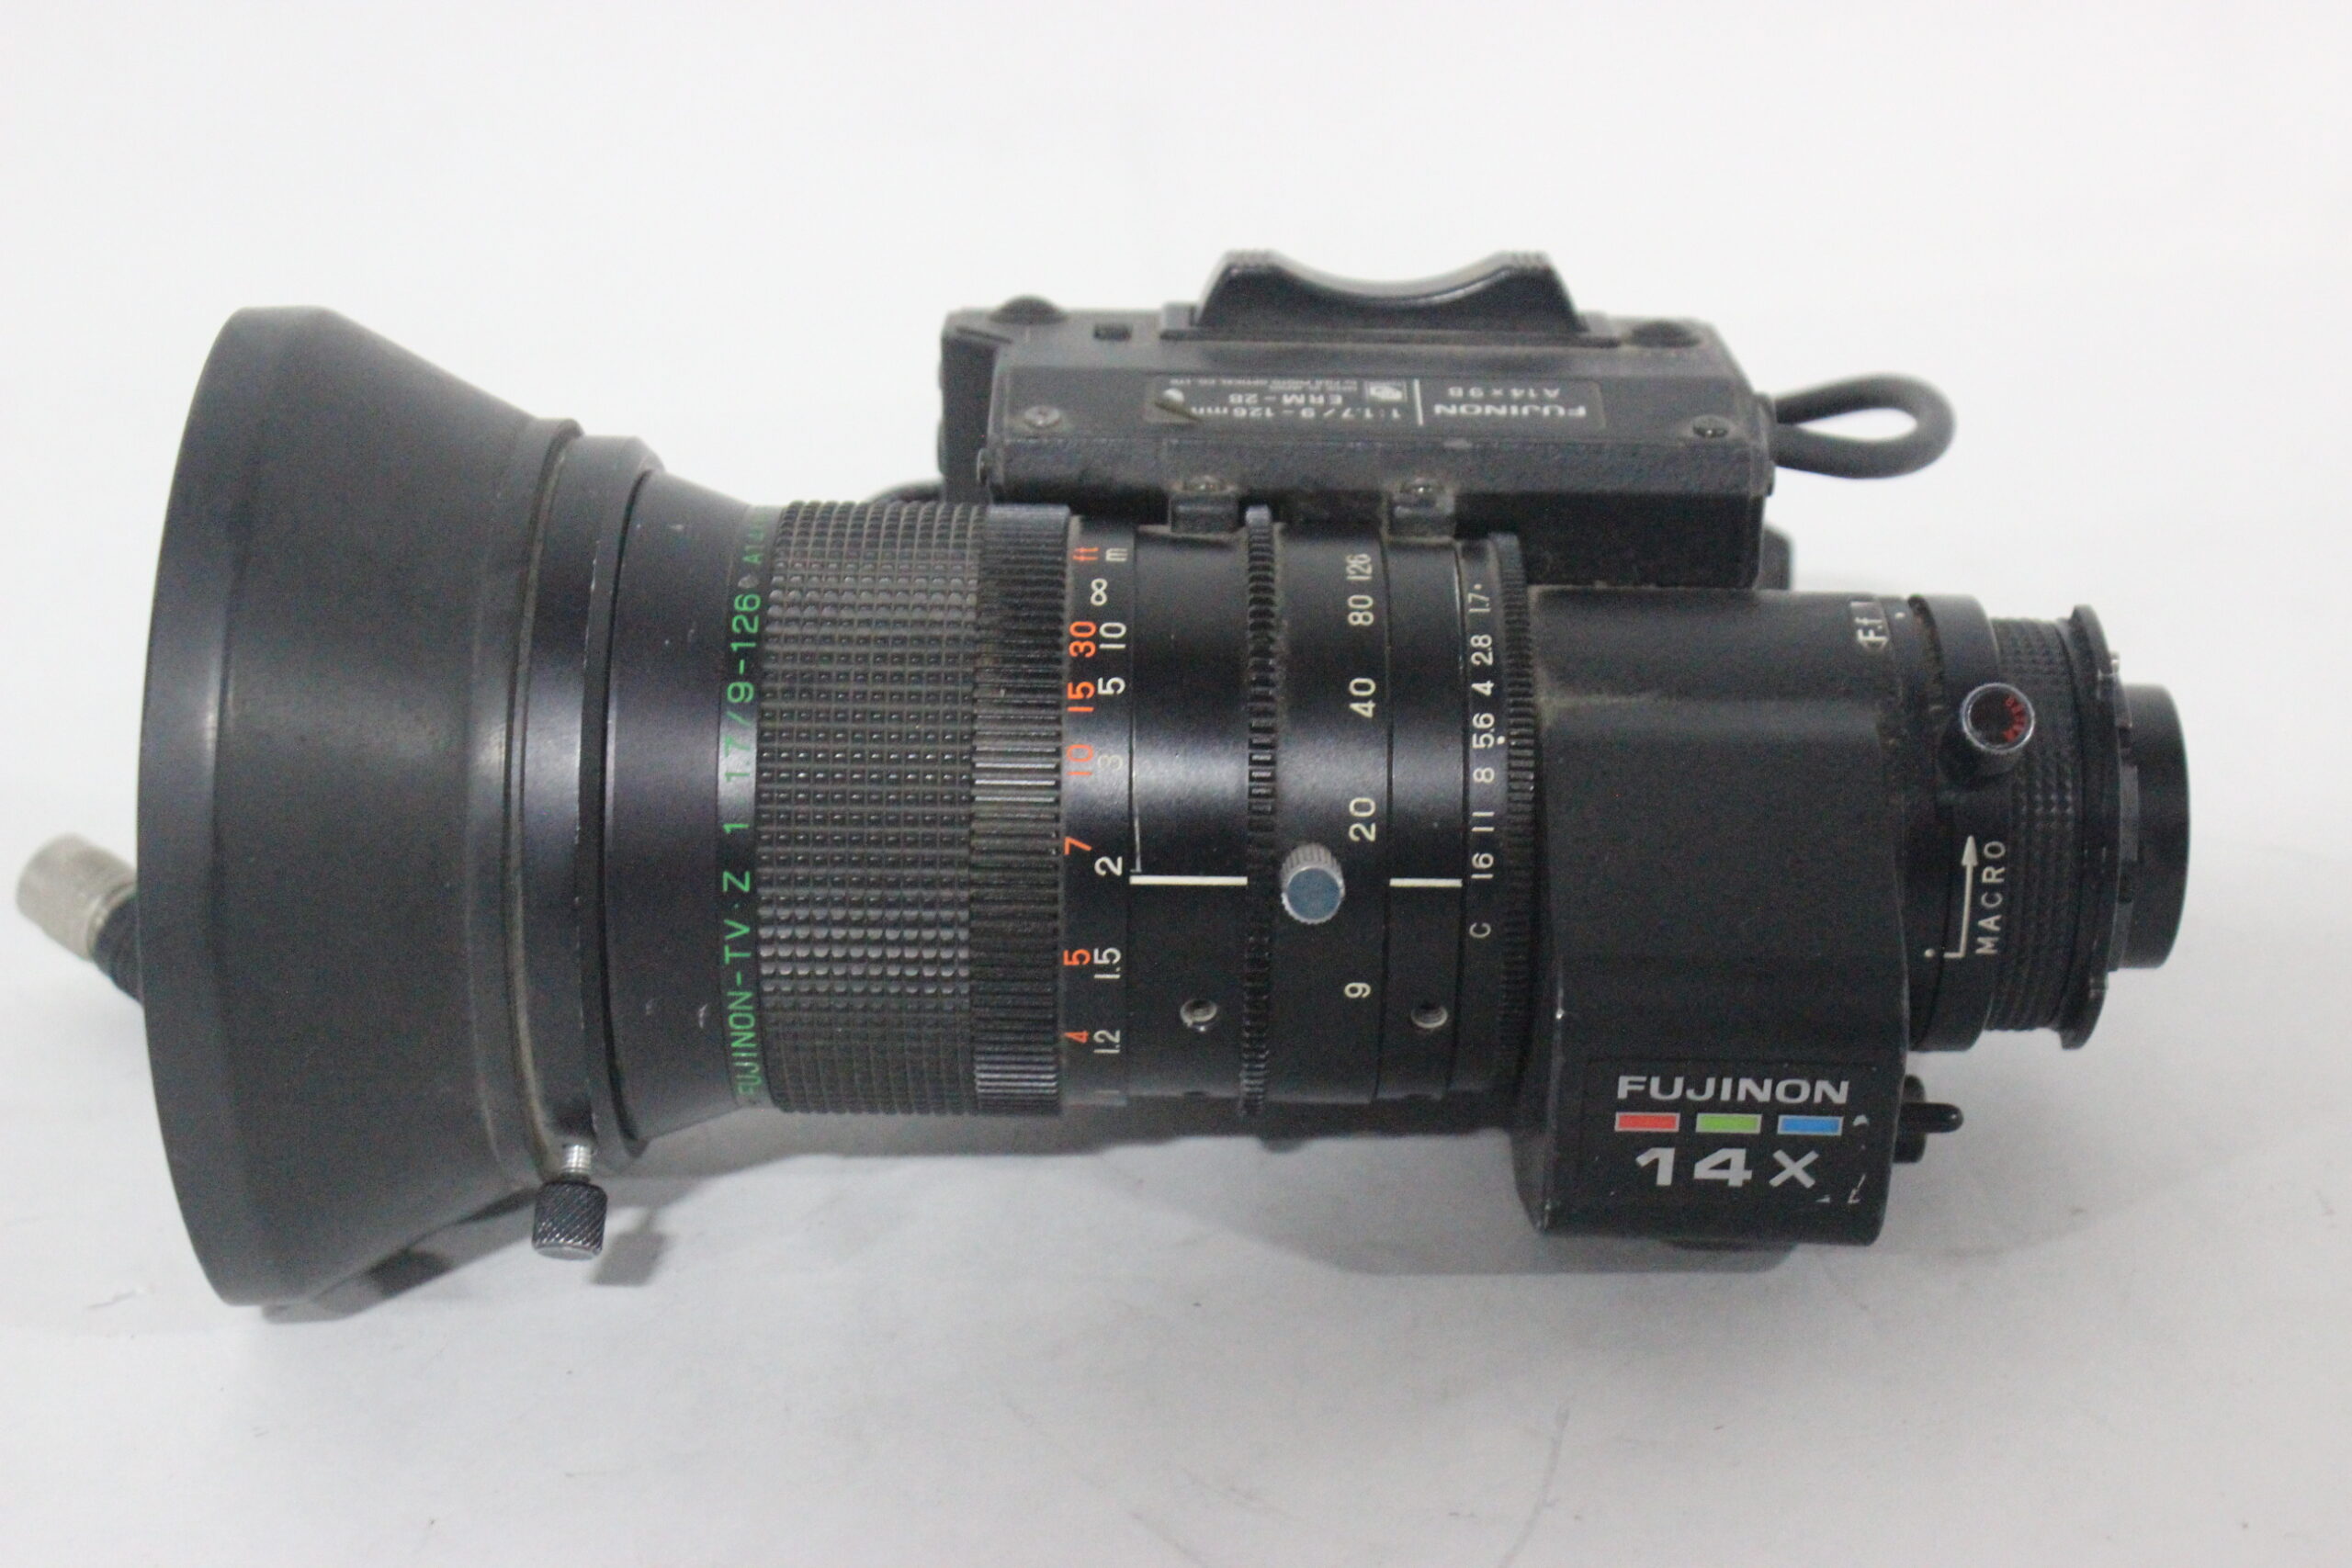 Fujinon A14x9B 1:1.7 / 9-126mm ERM-28 Broadcast Zoom Lens